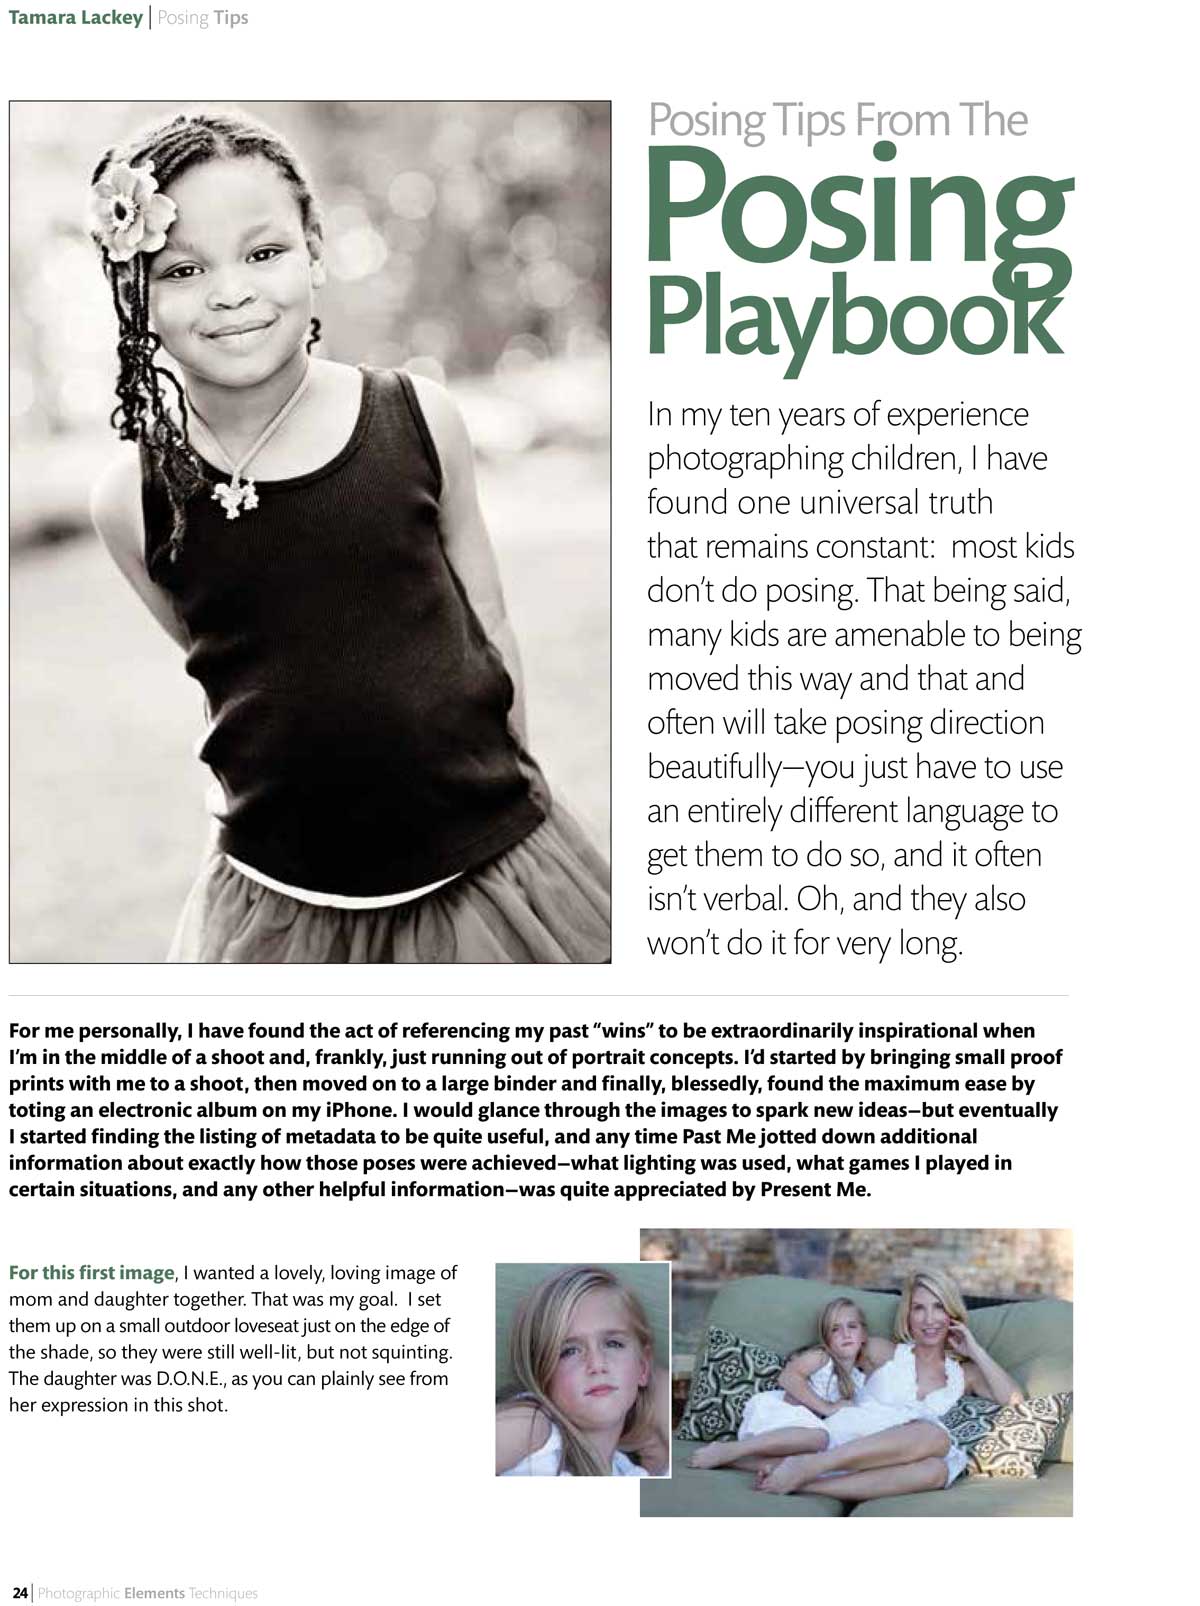 Tamara Lackey, The Posing Playbook, Photographic Elements Techniques Magazine, Posing, Photoshop.